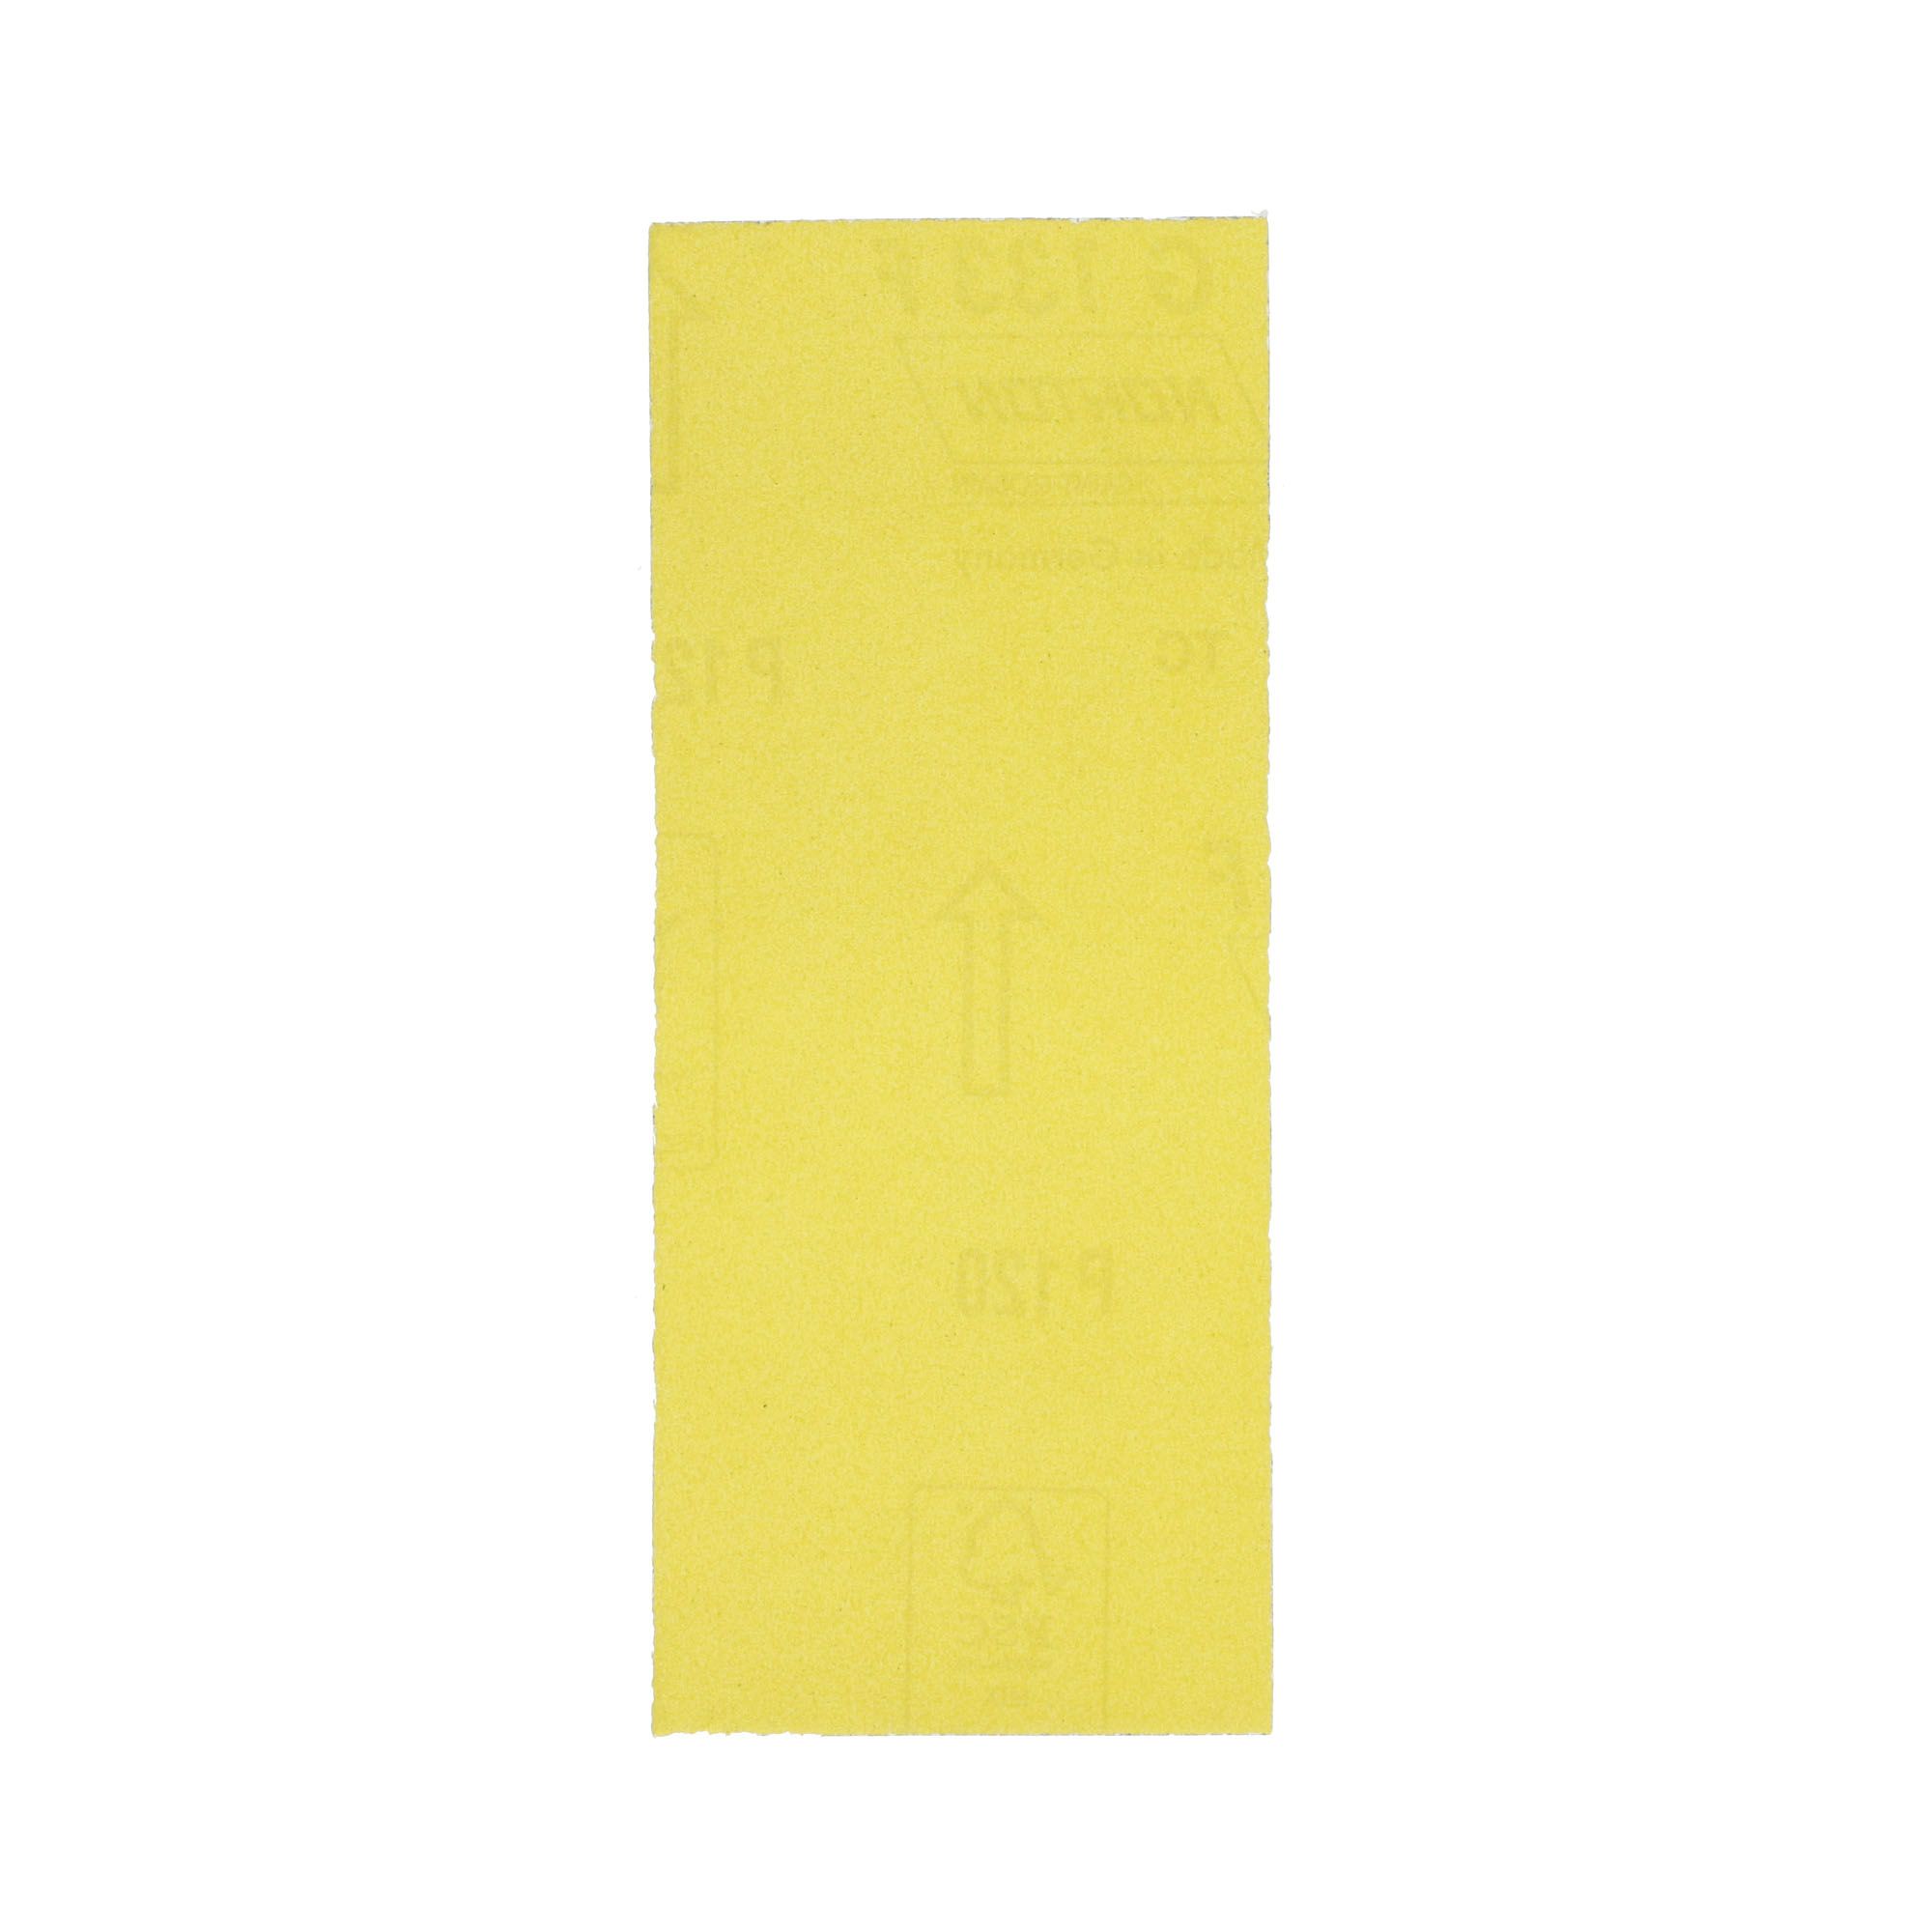 Norton 120 grit Yellow Sanding sheet (L)93mm (W)230mm, Pack of 5